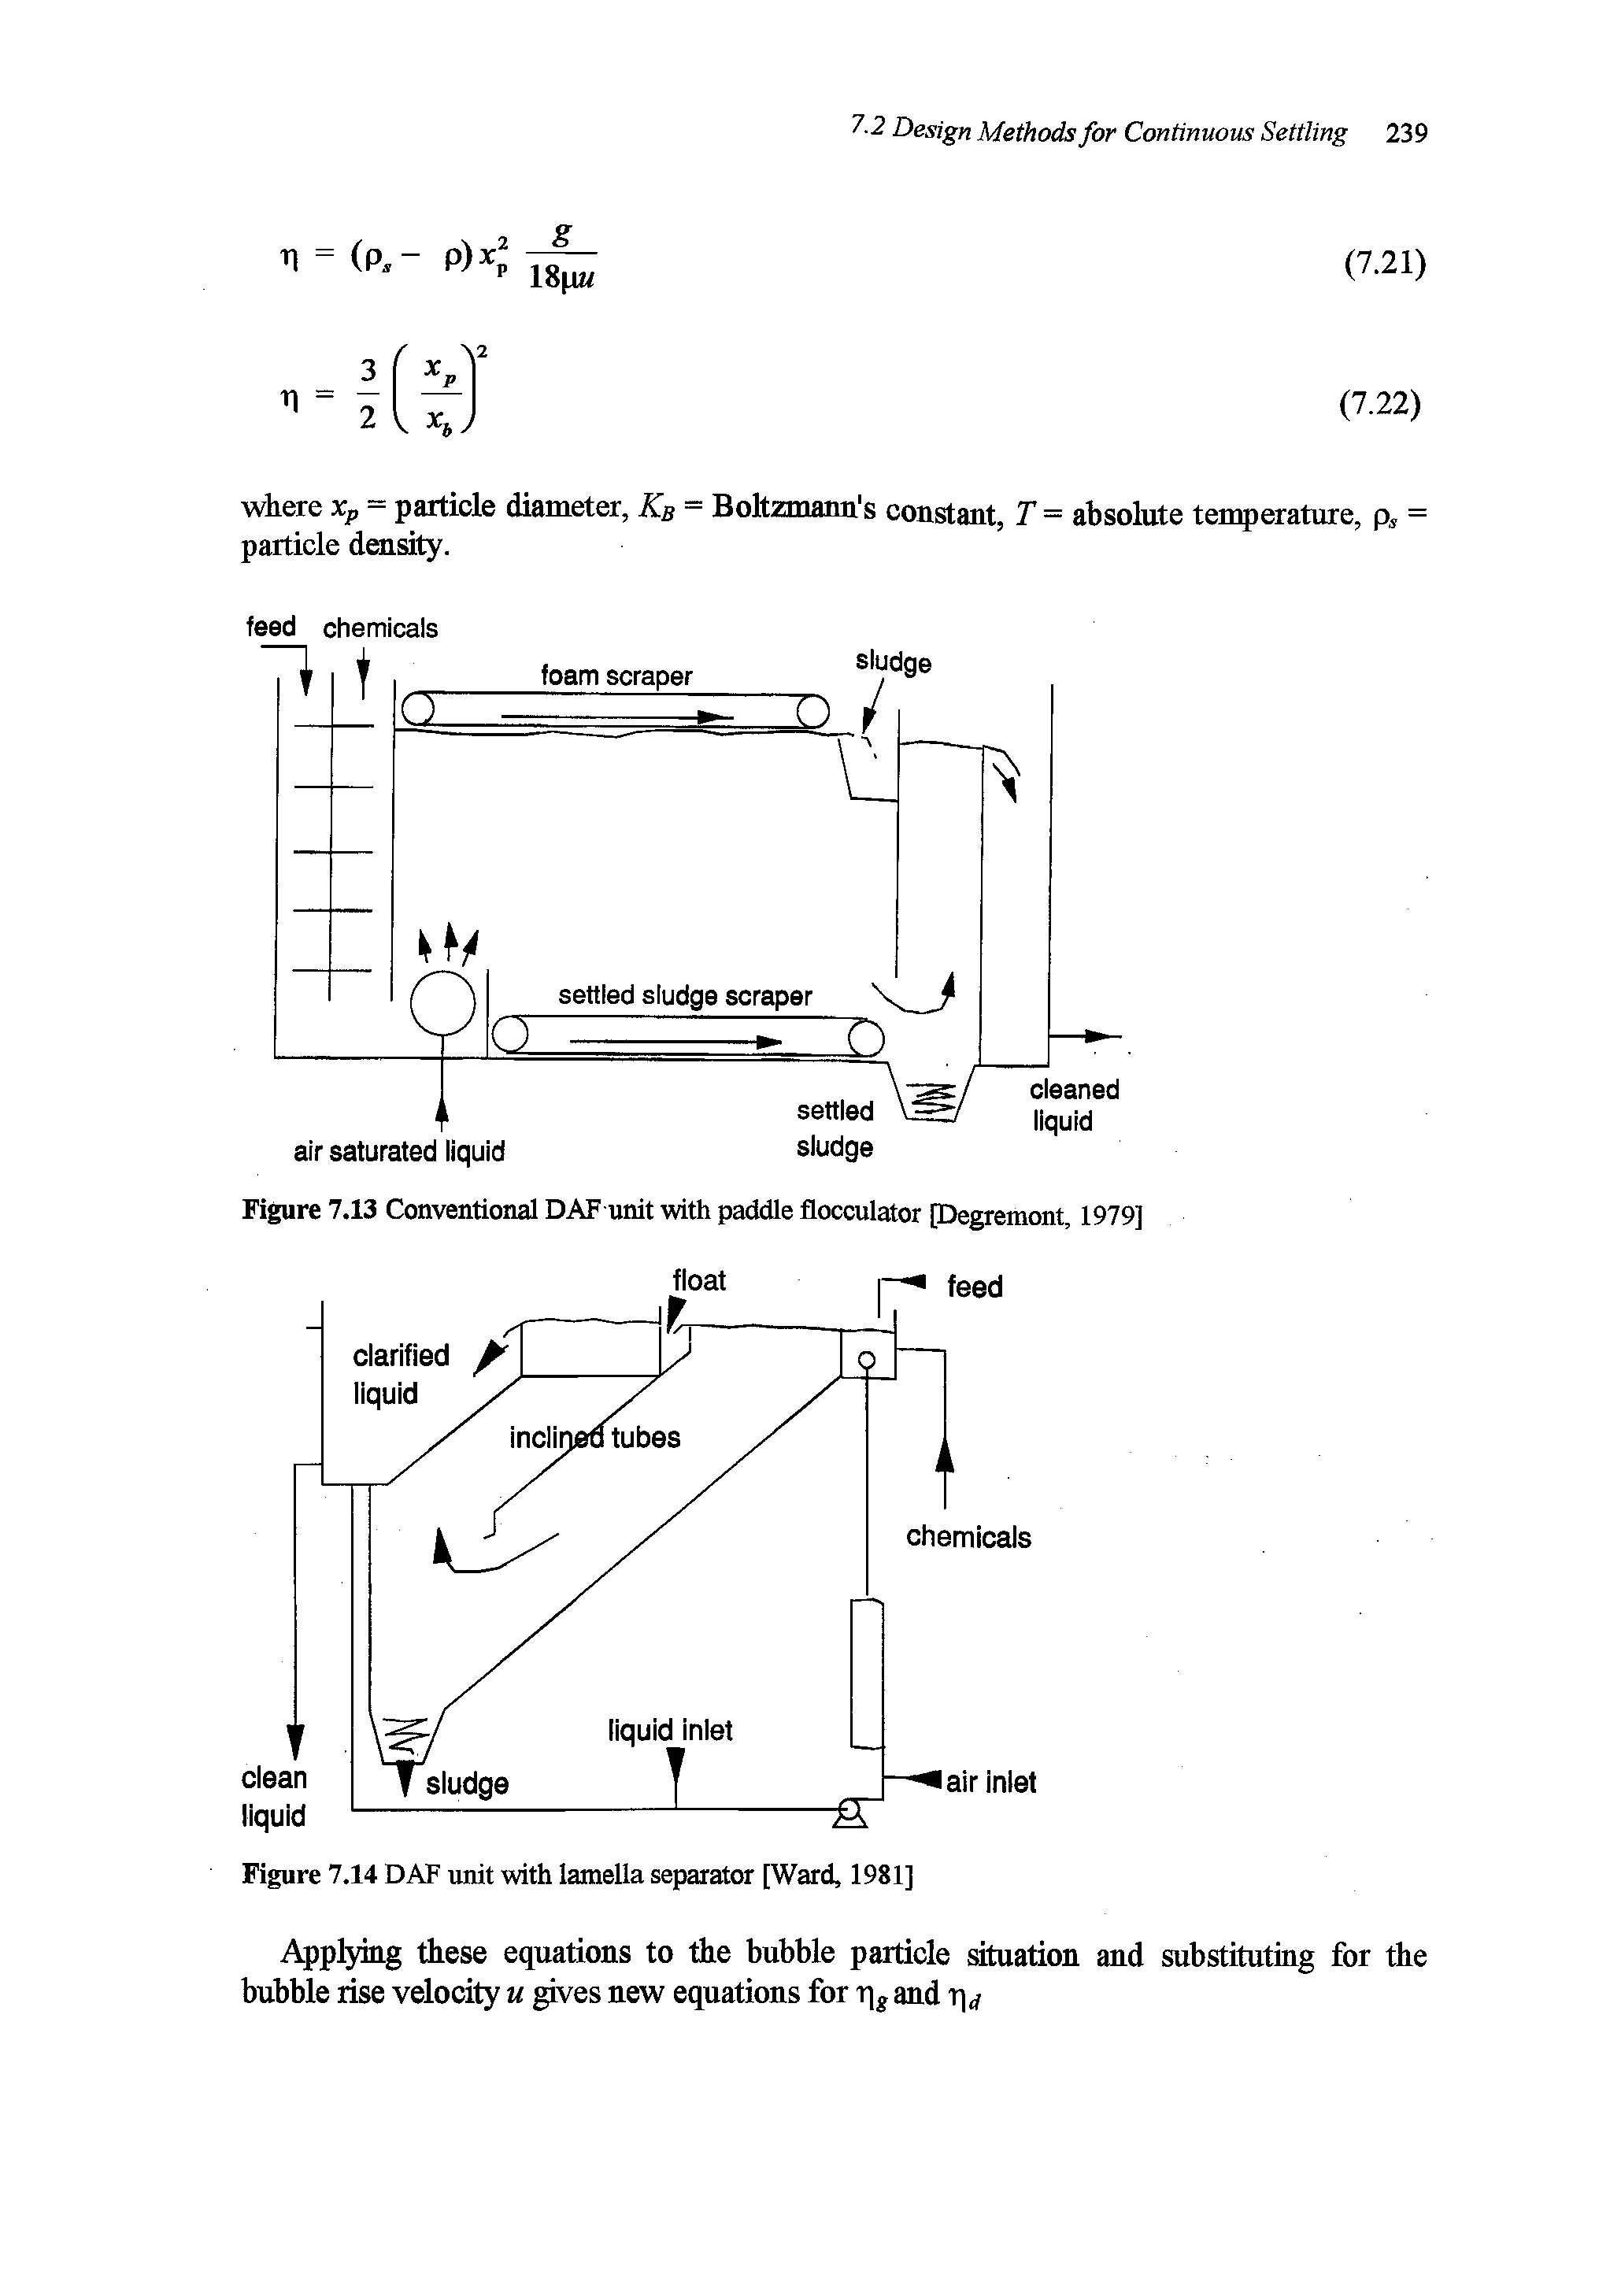 Figure 7.14 DAF unit with lamella separator [Ward, 1981]...